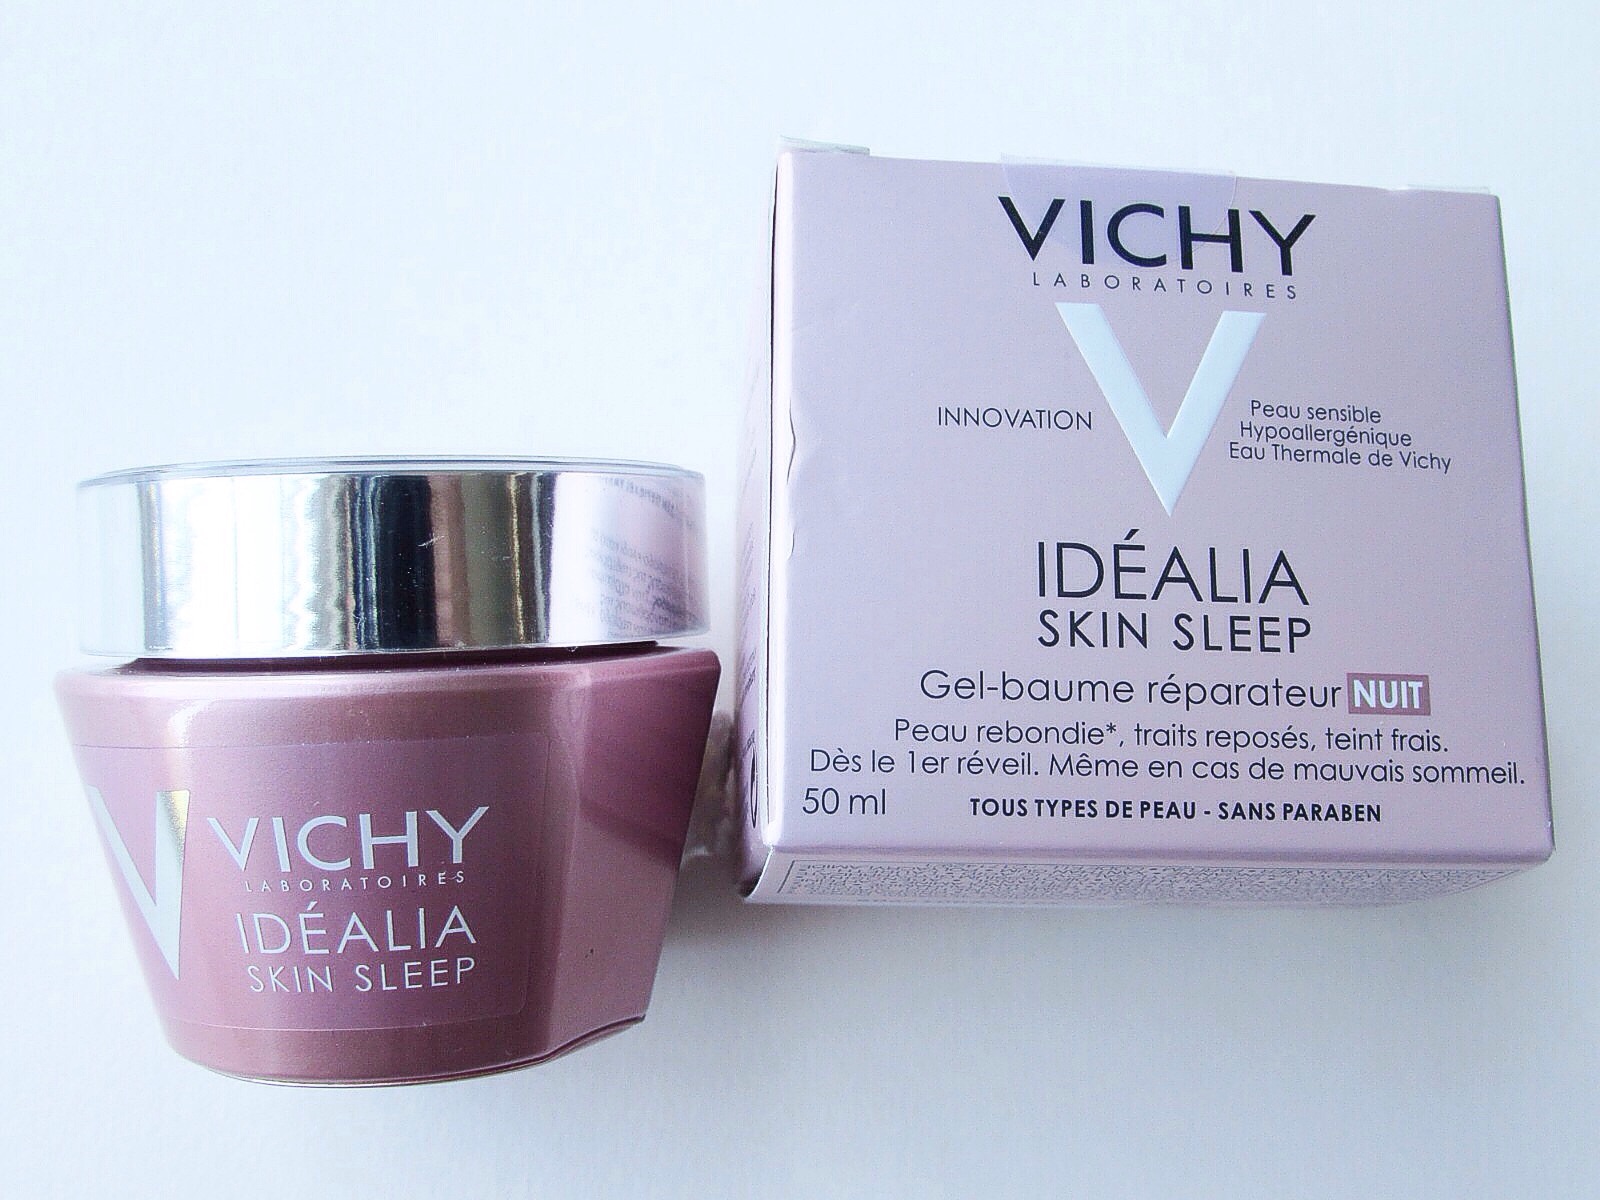 Vichy Idealia Skin Sleep Recovery Night Gel-Balm